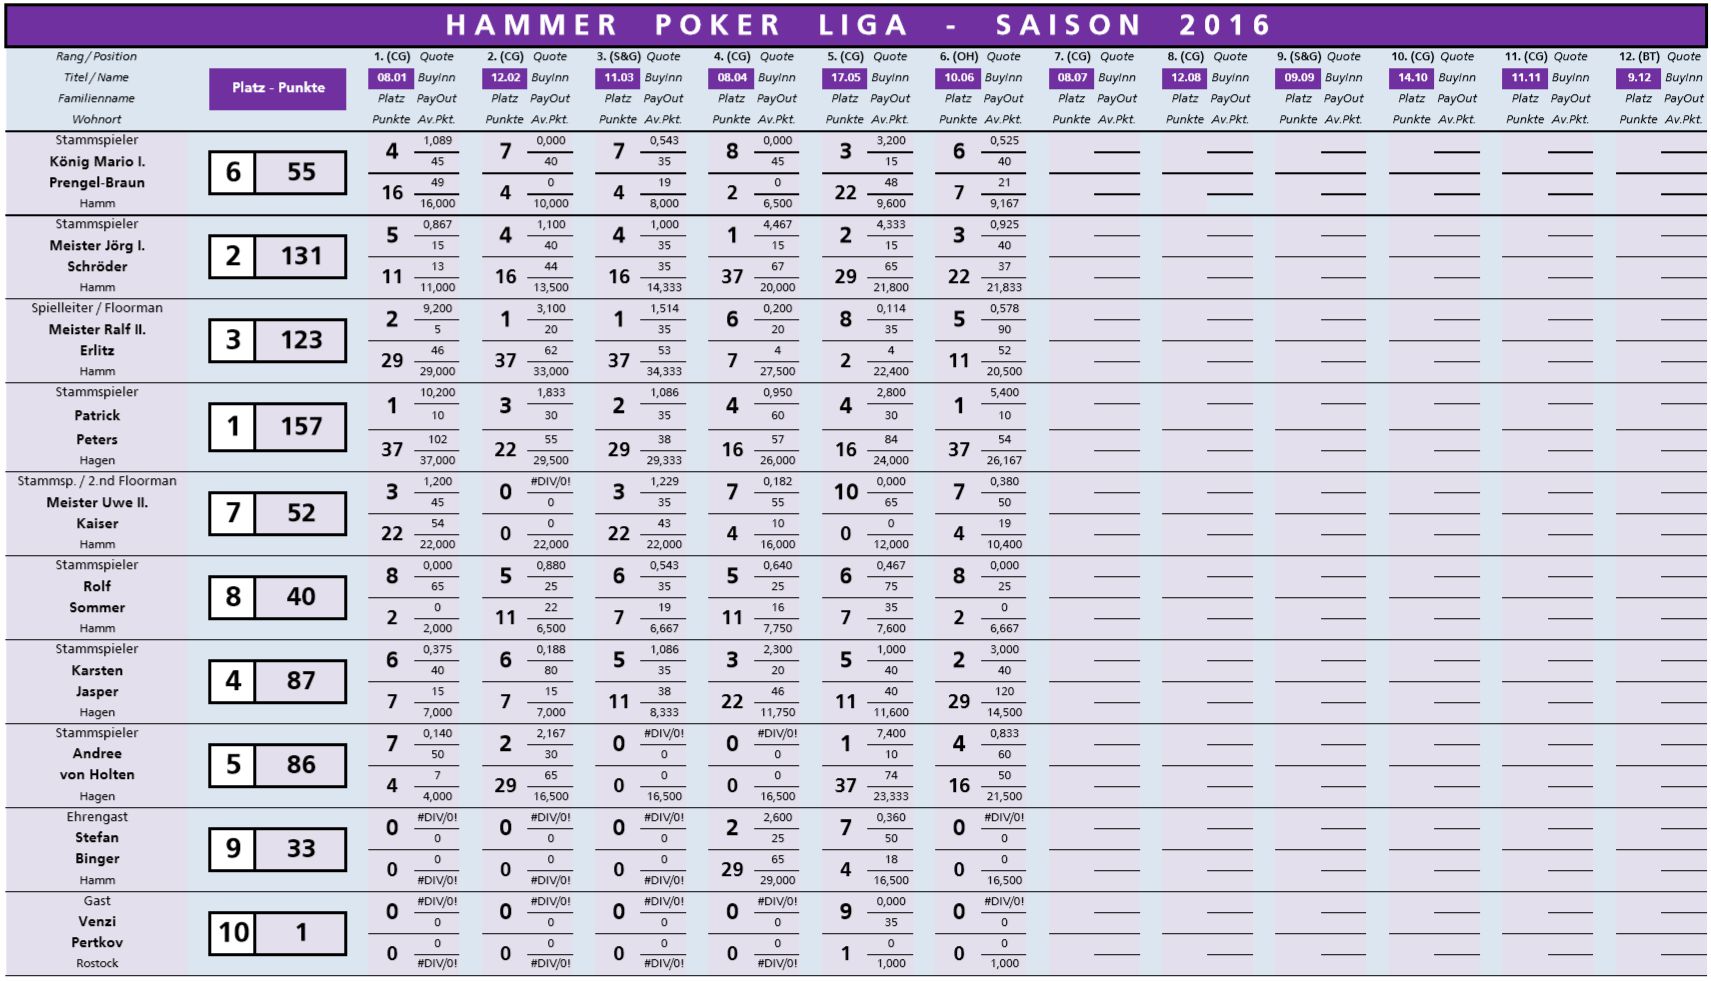 Letzte Offizielle Tabelle der HPL (Hammer Poker Liga)